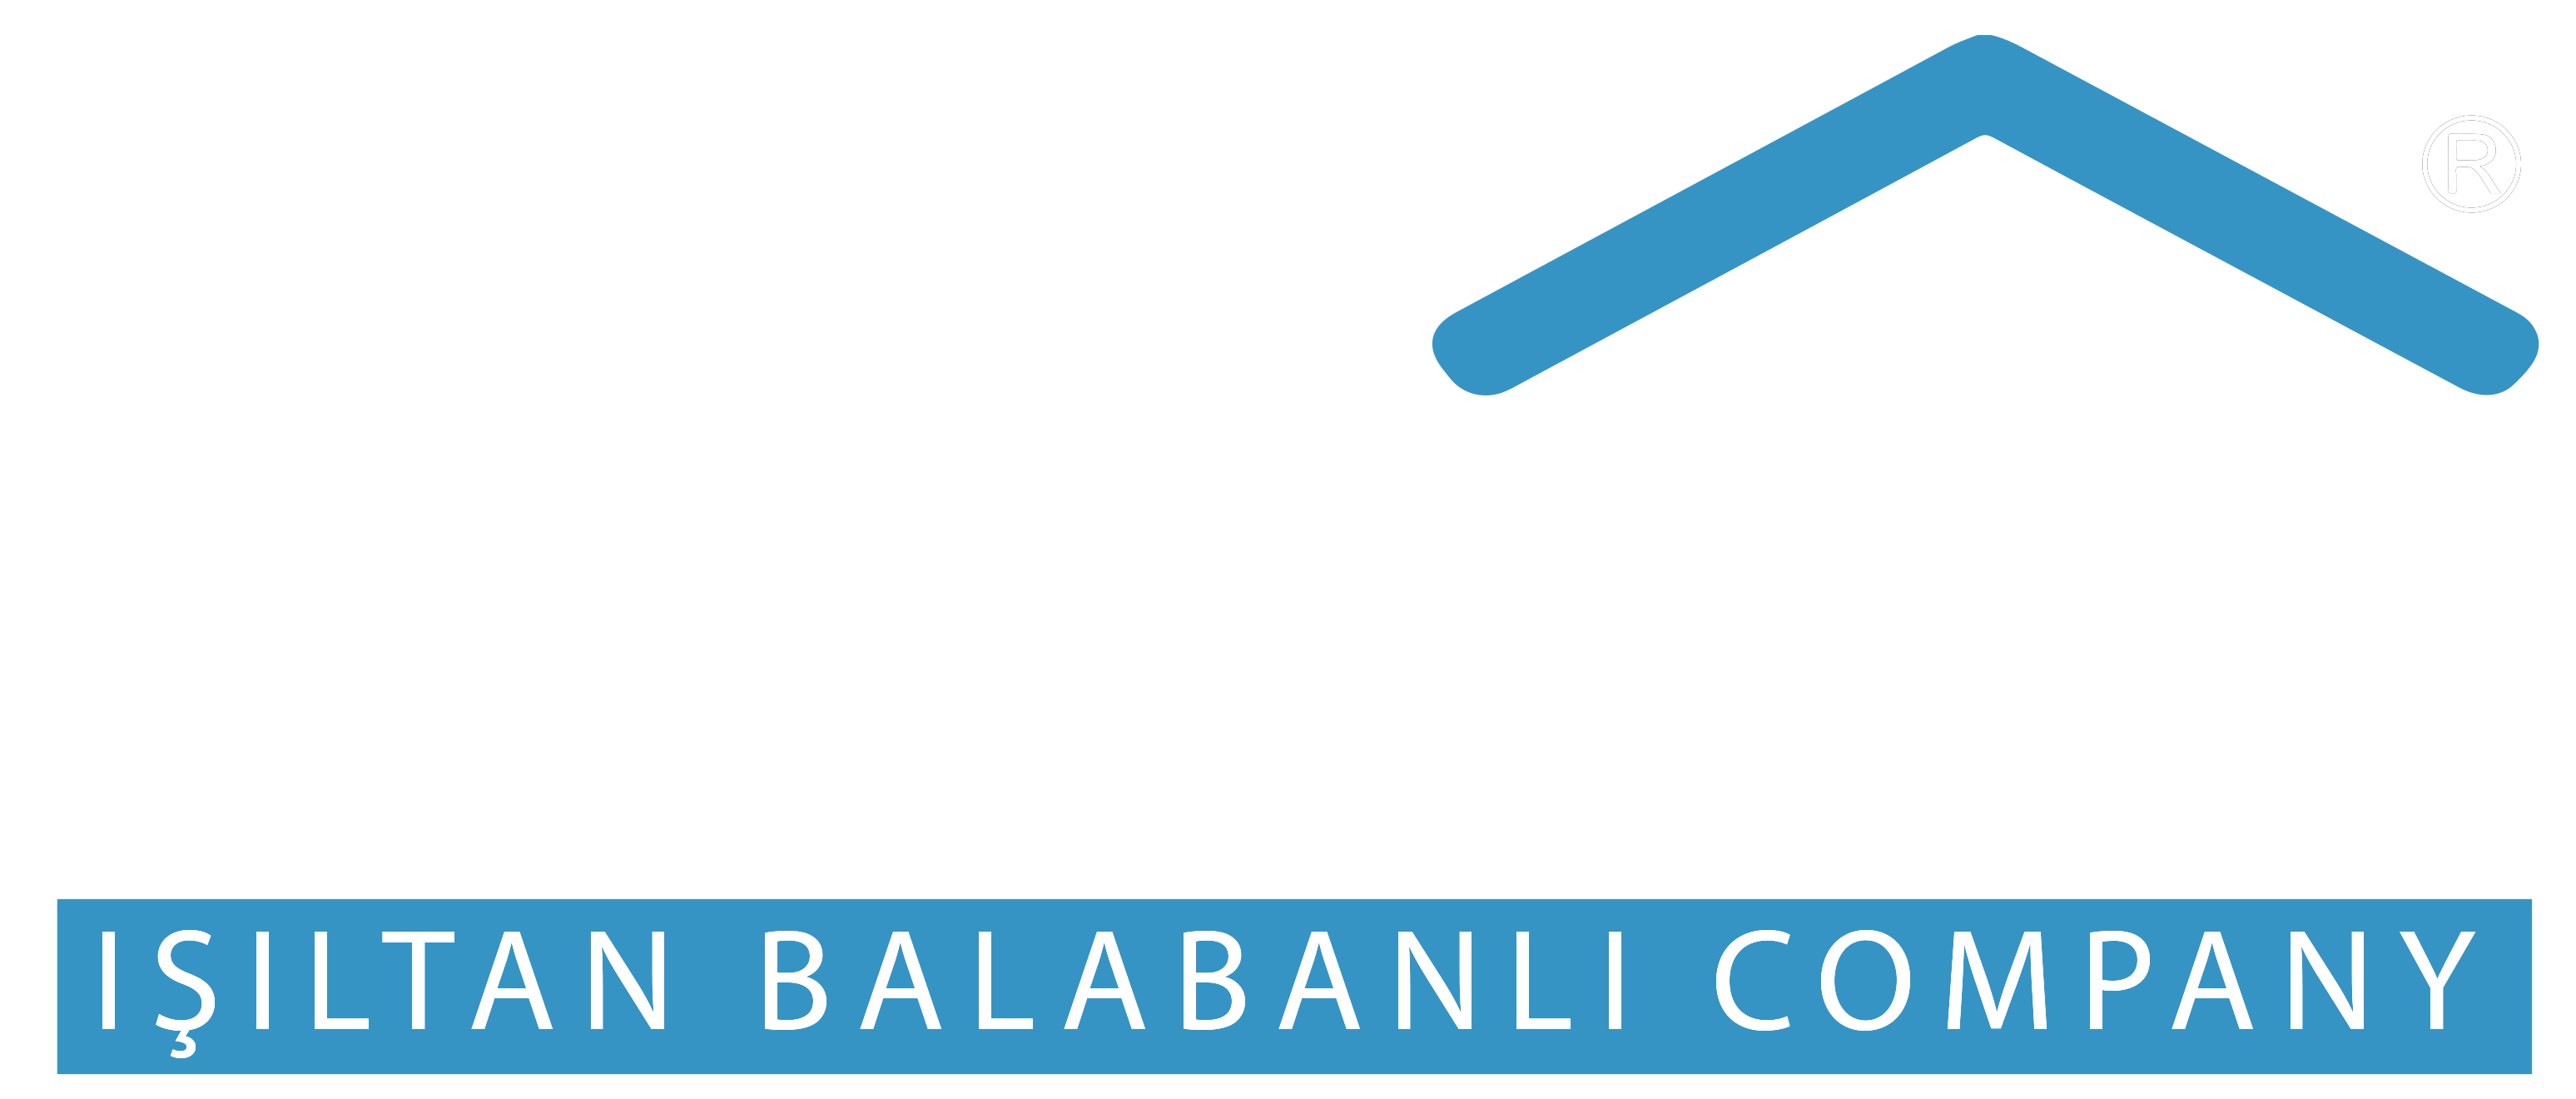 Işıltan Balabanlı Companies – IBC Group